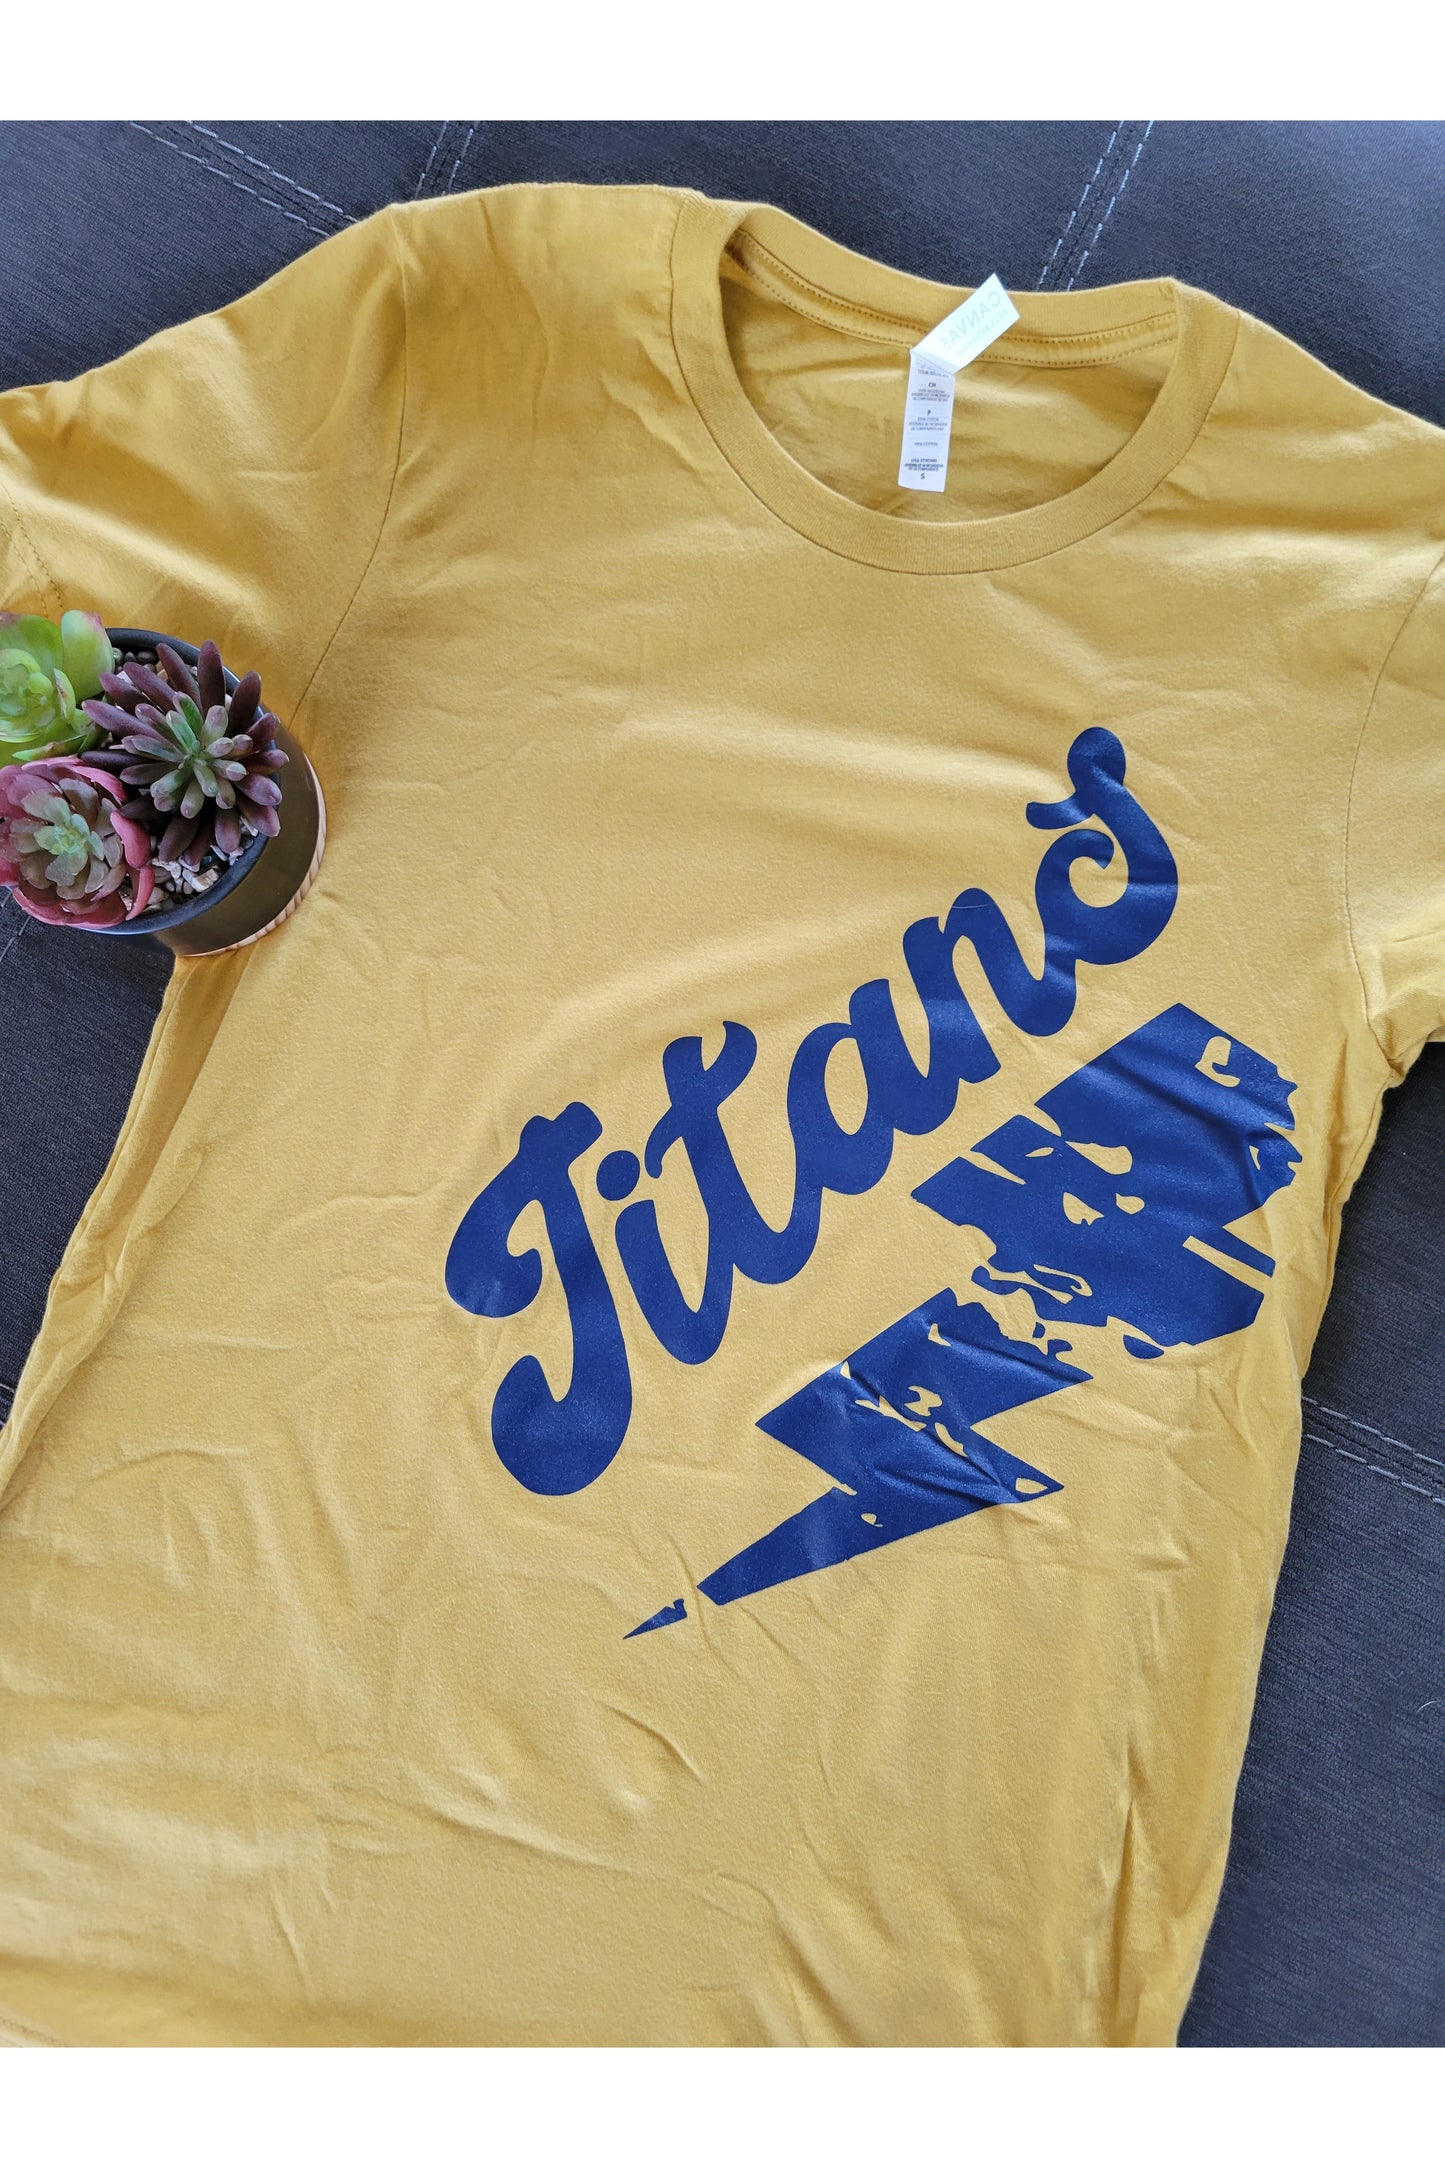 Titans Yellow & Navy Graphic Tee